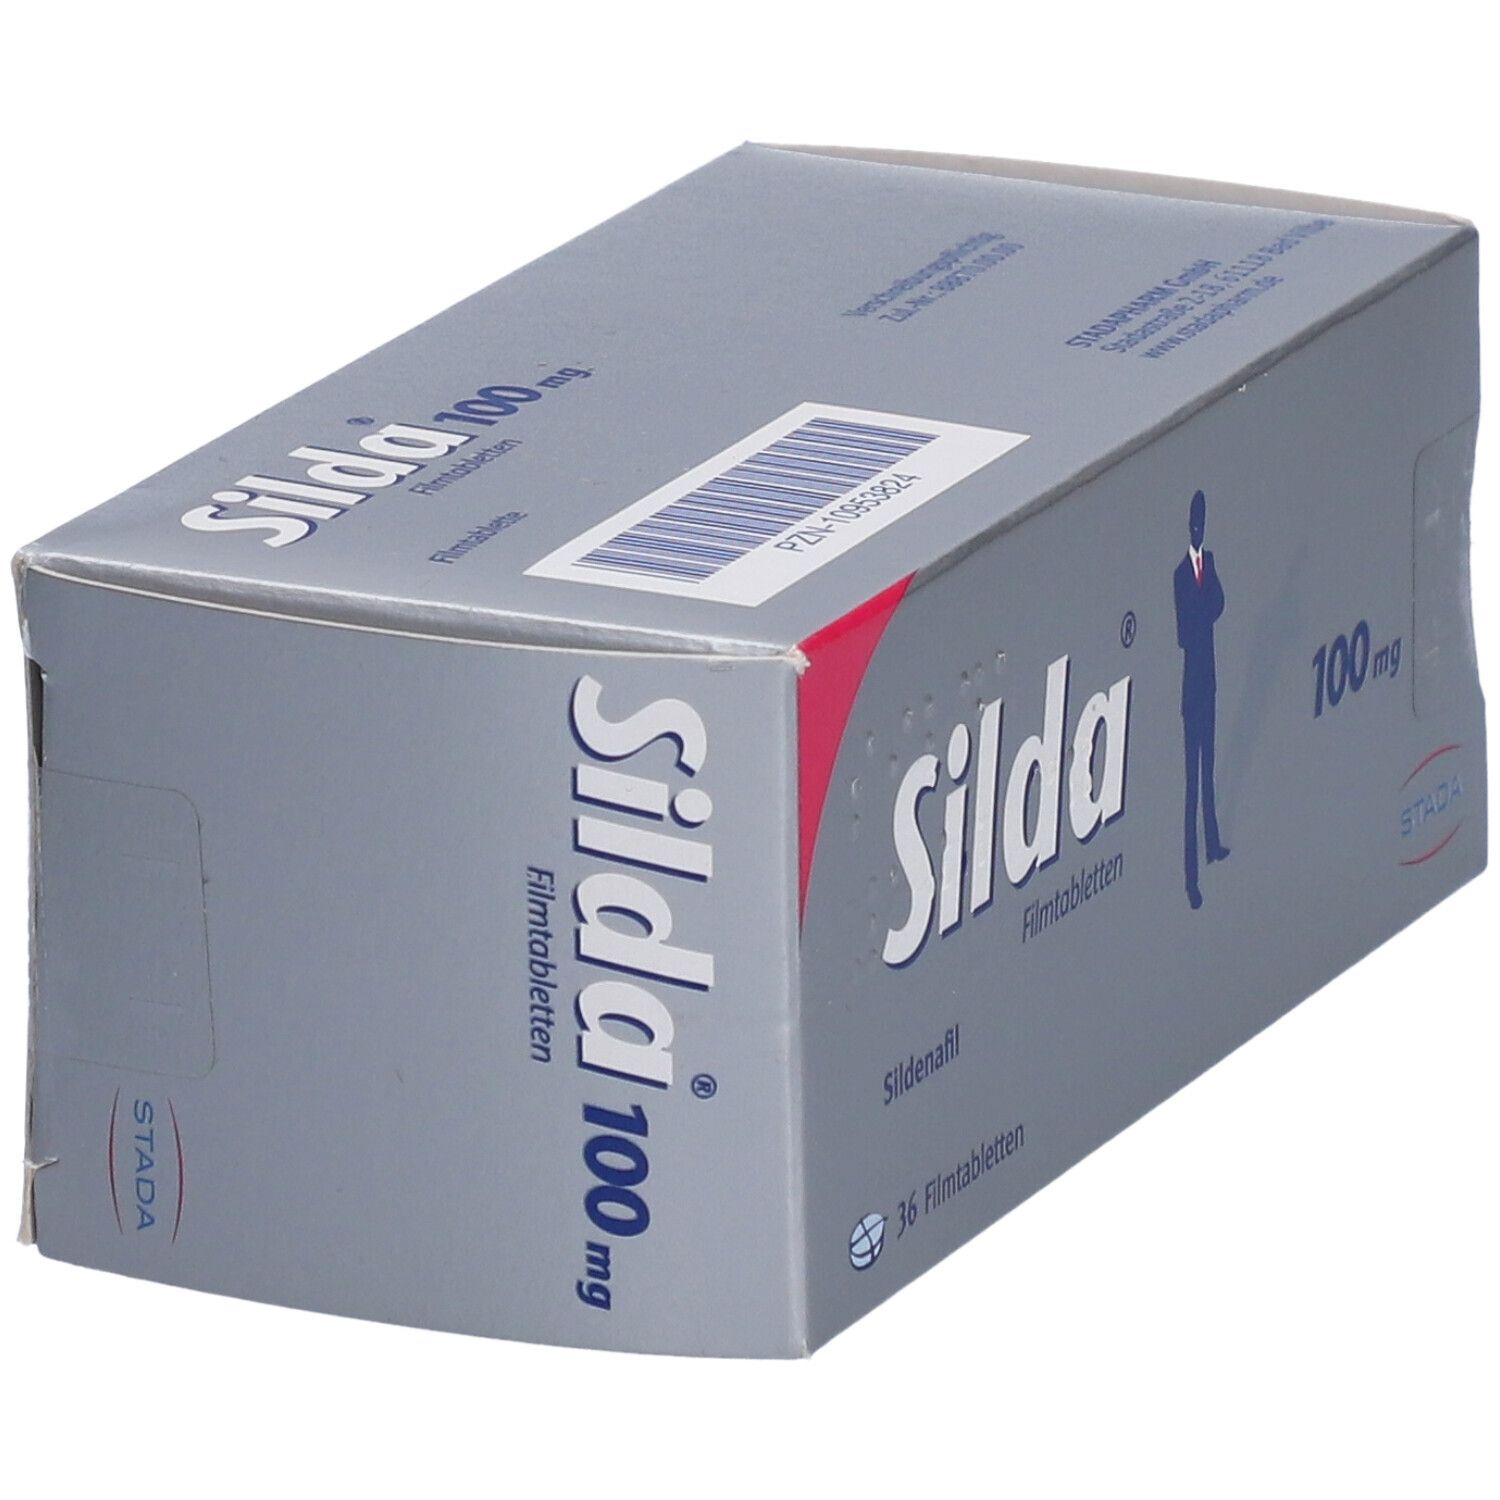 Silda® 100 mg